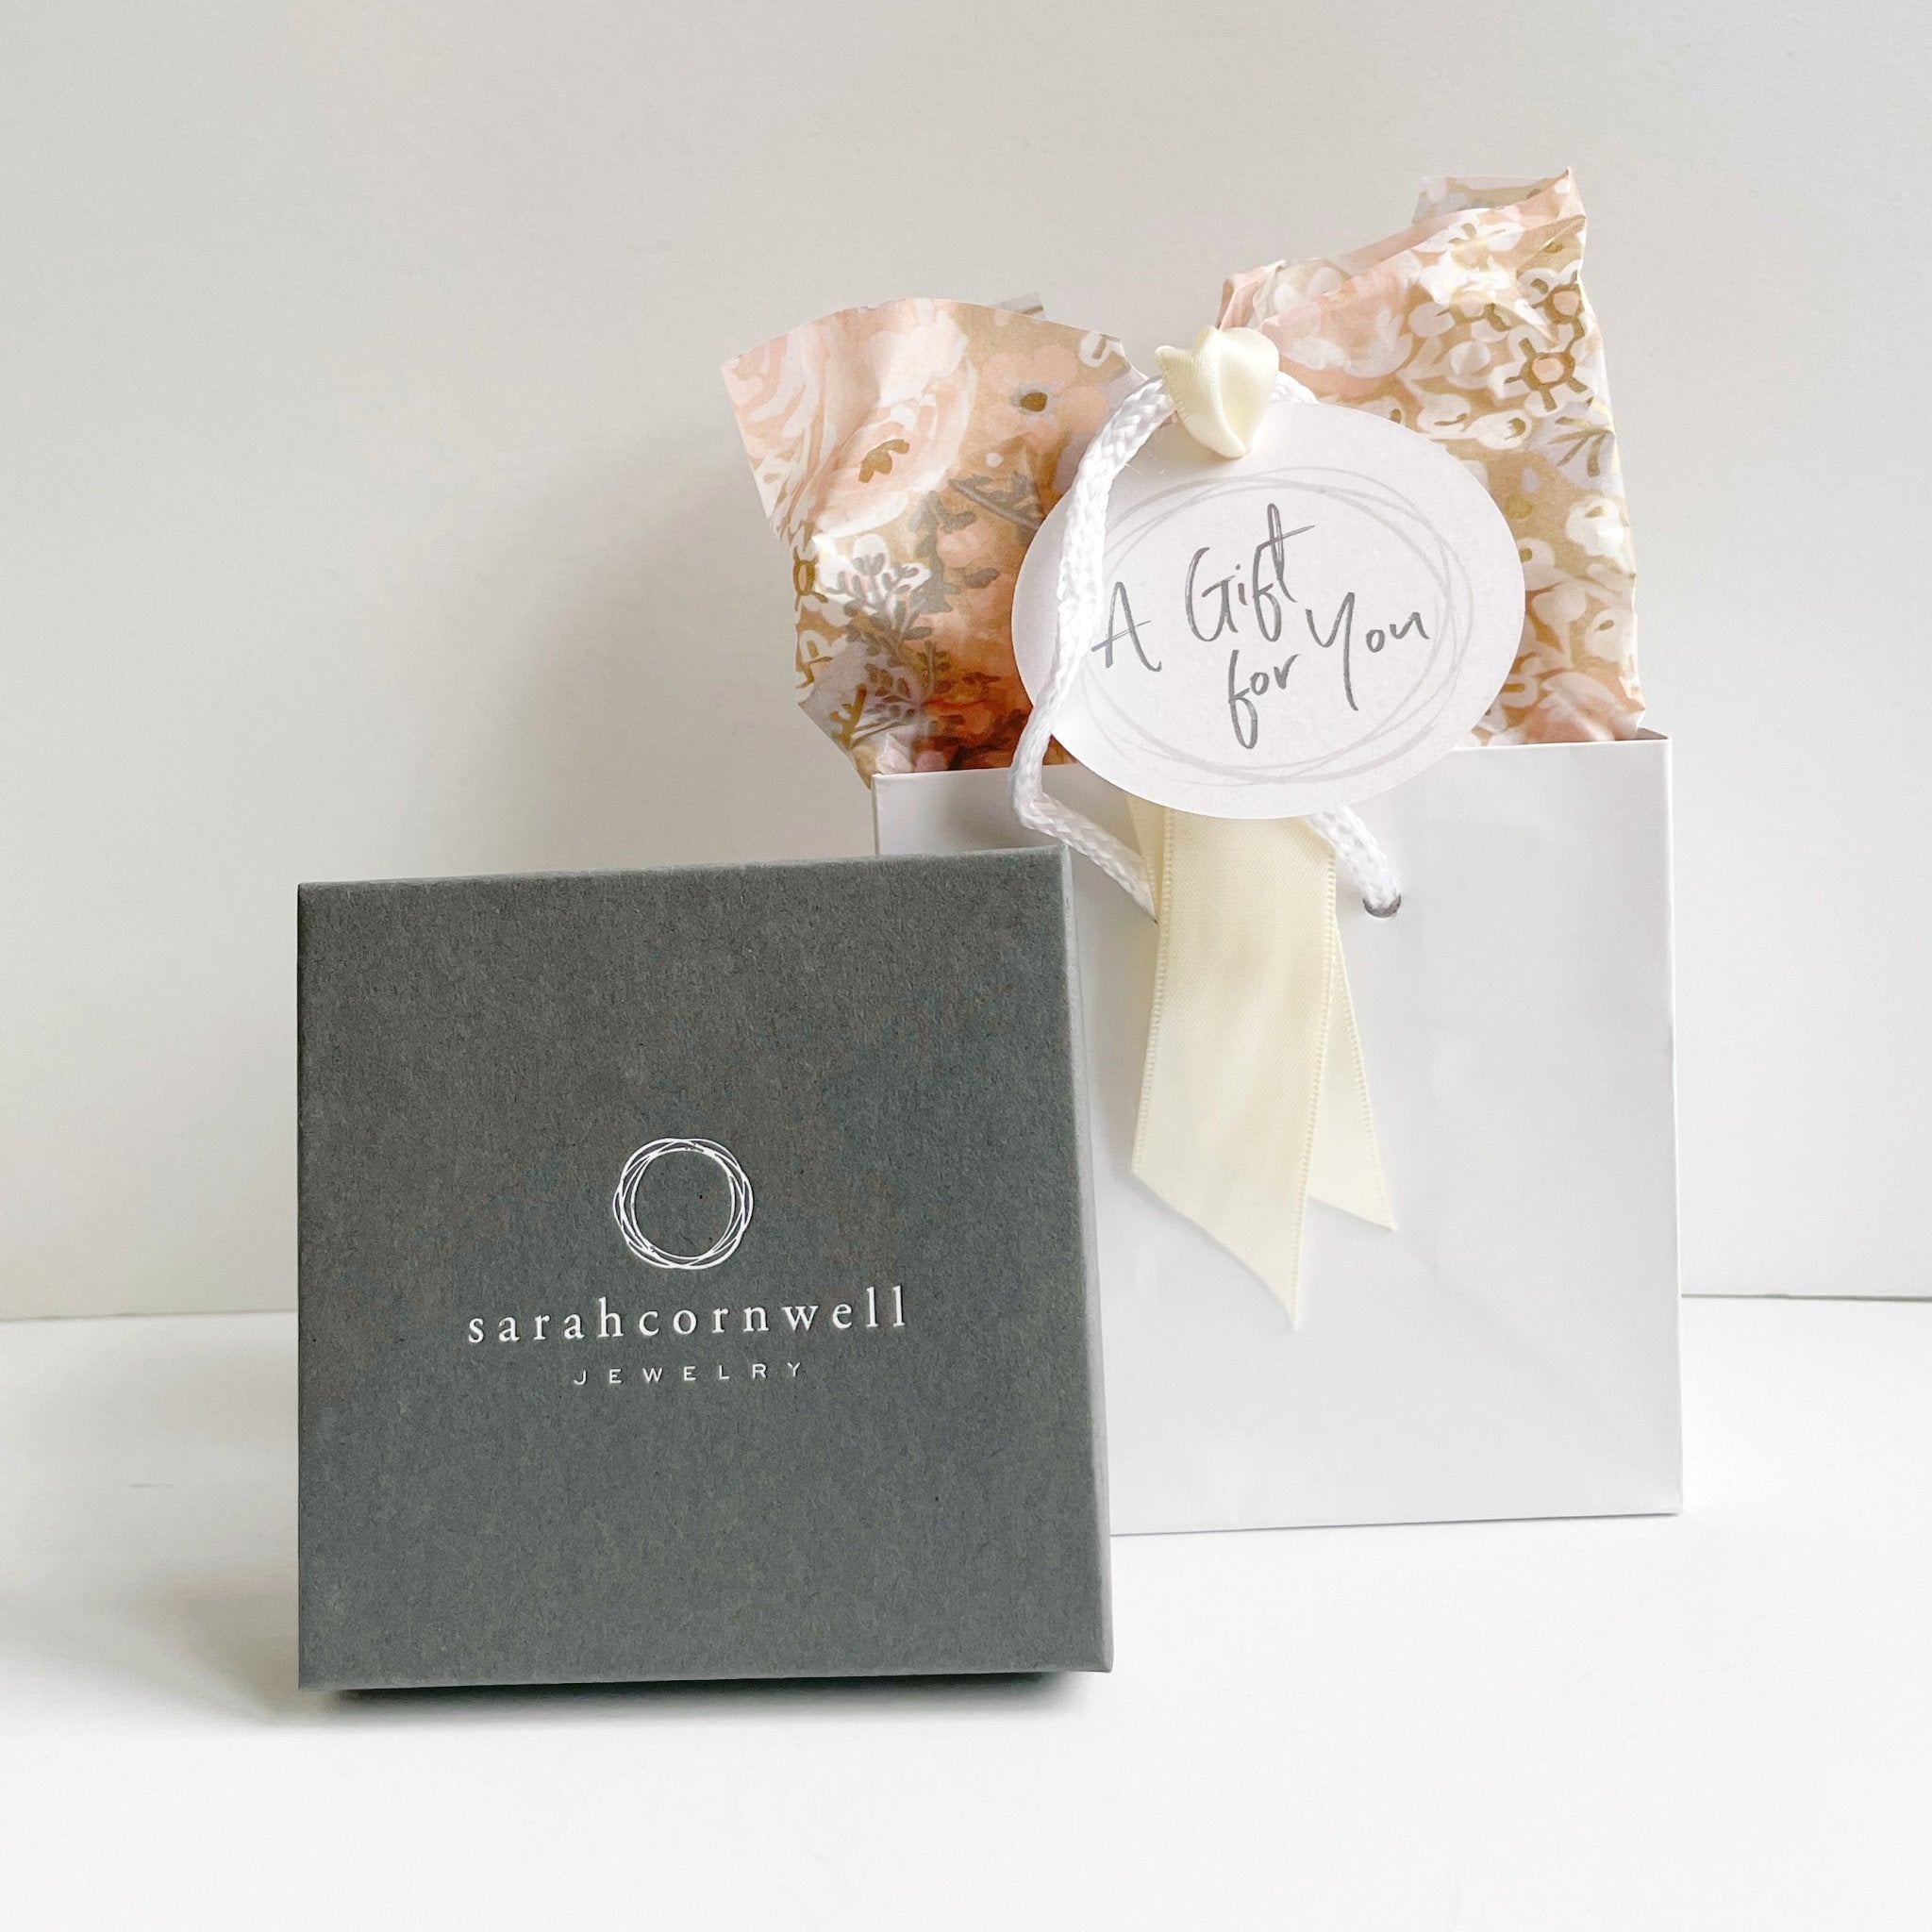 Gift Wrap - Sarah Cornwell Jewelry